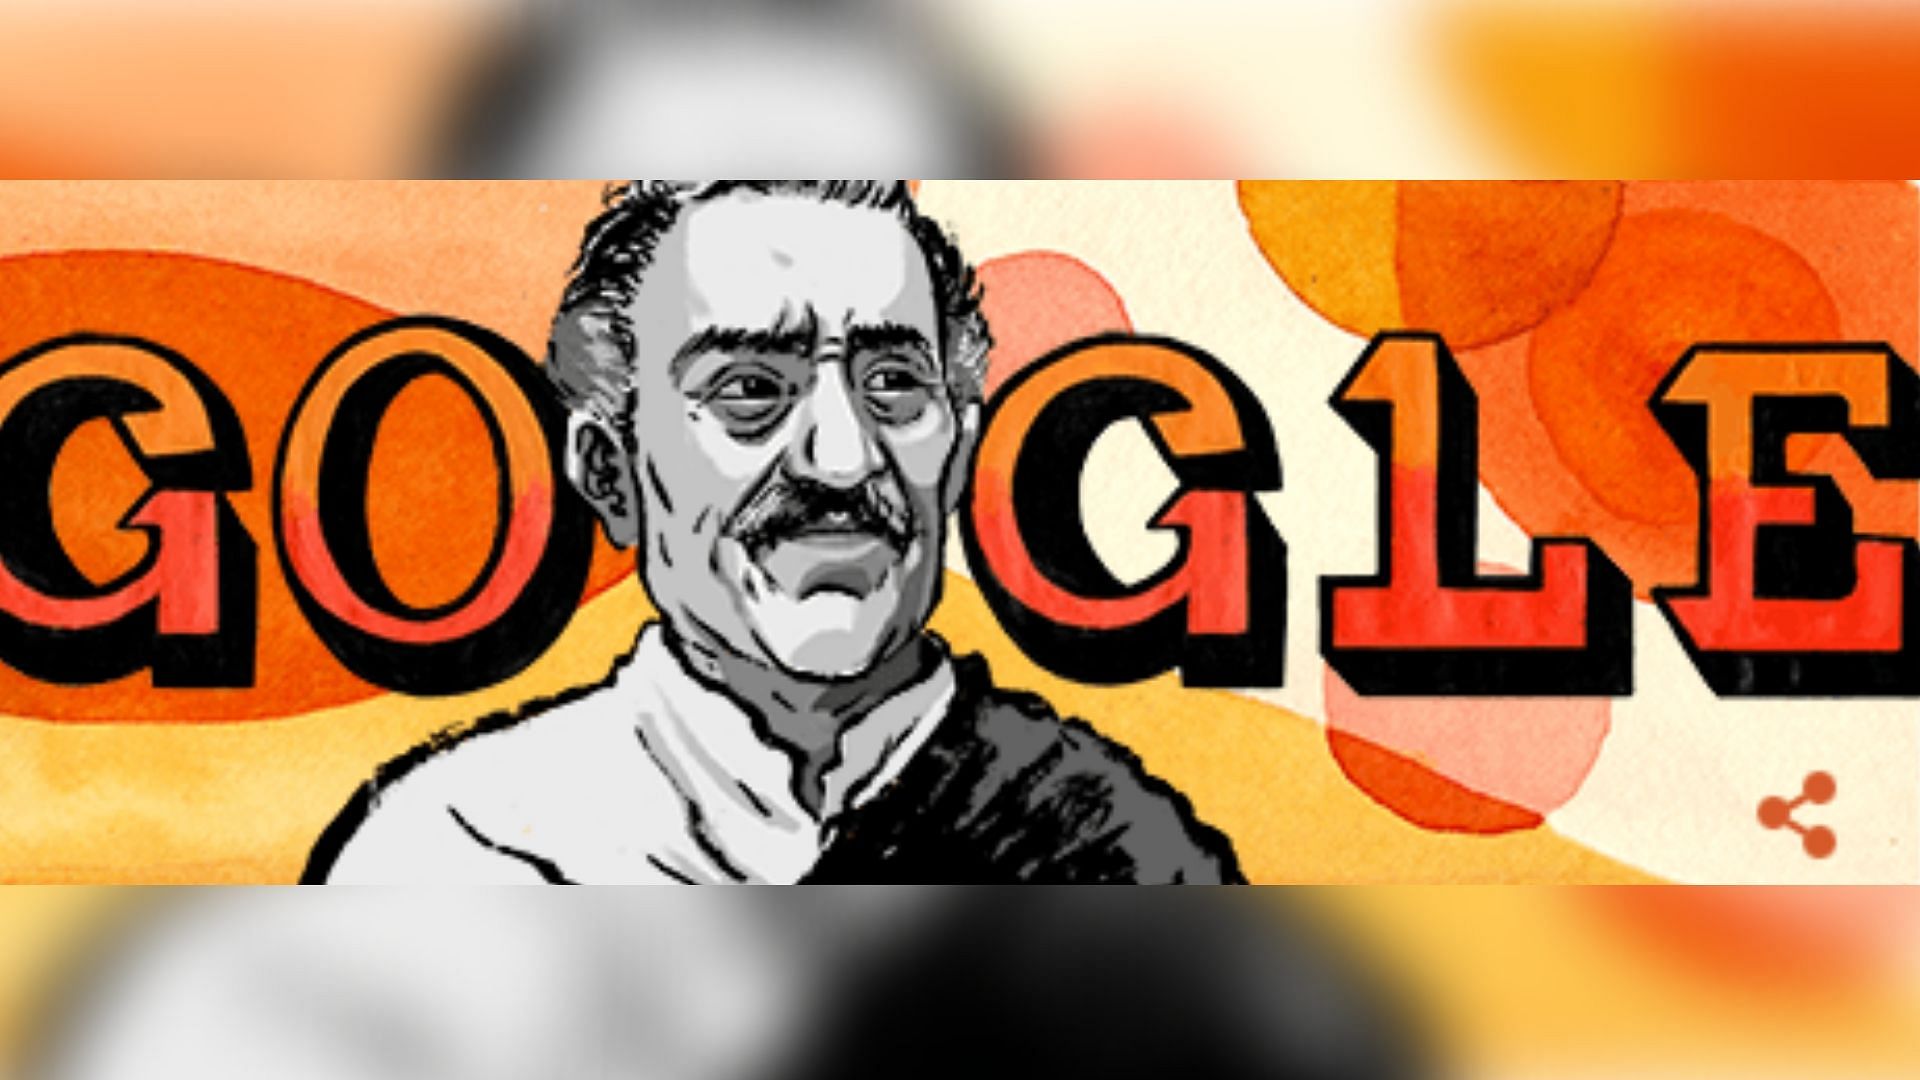 Google celebrates the legend’s birth anniversary.